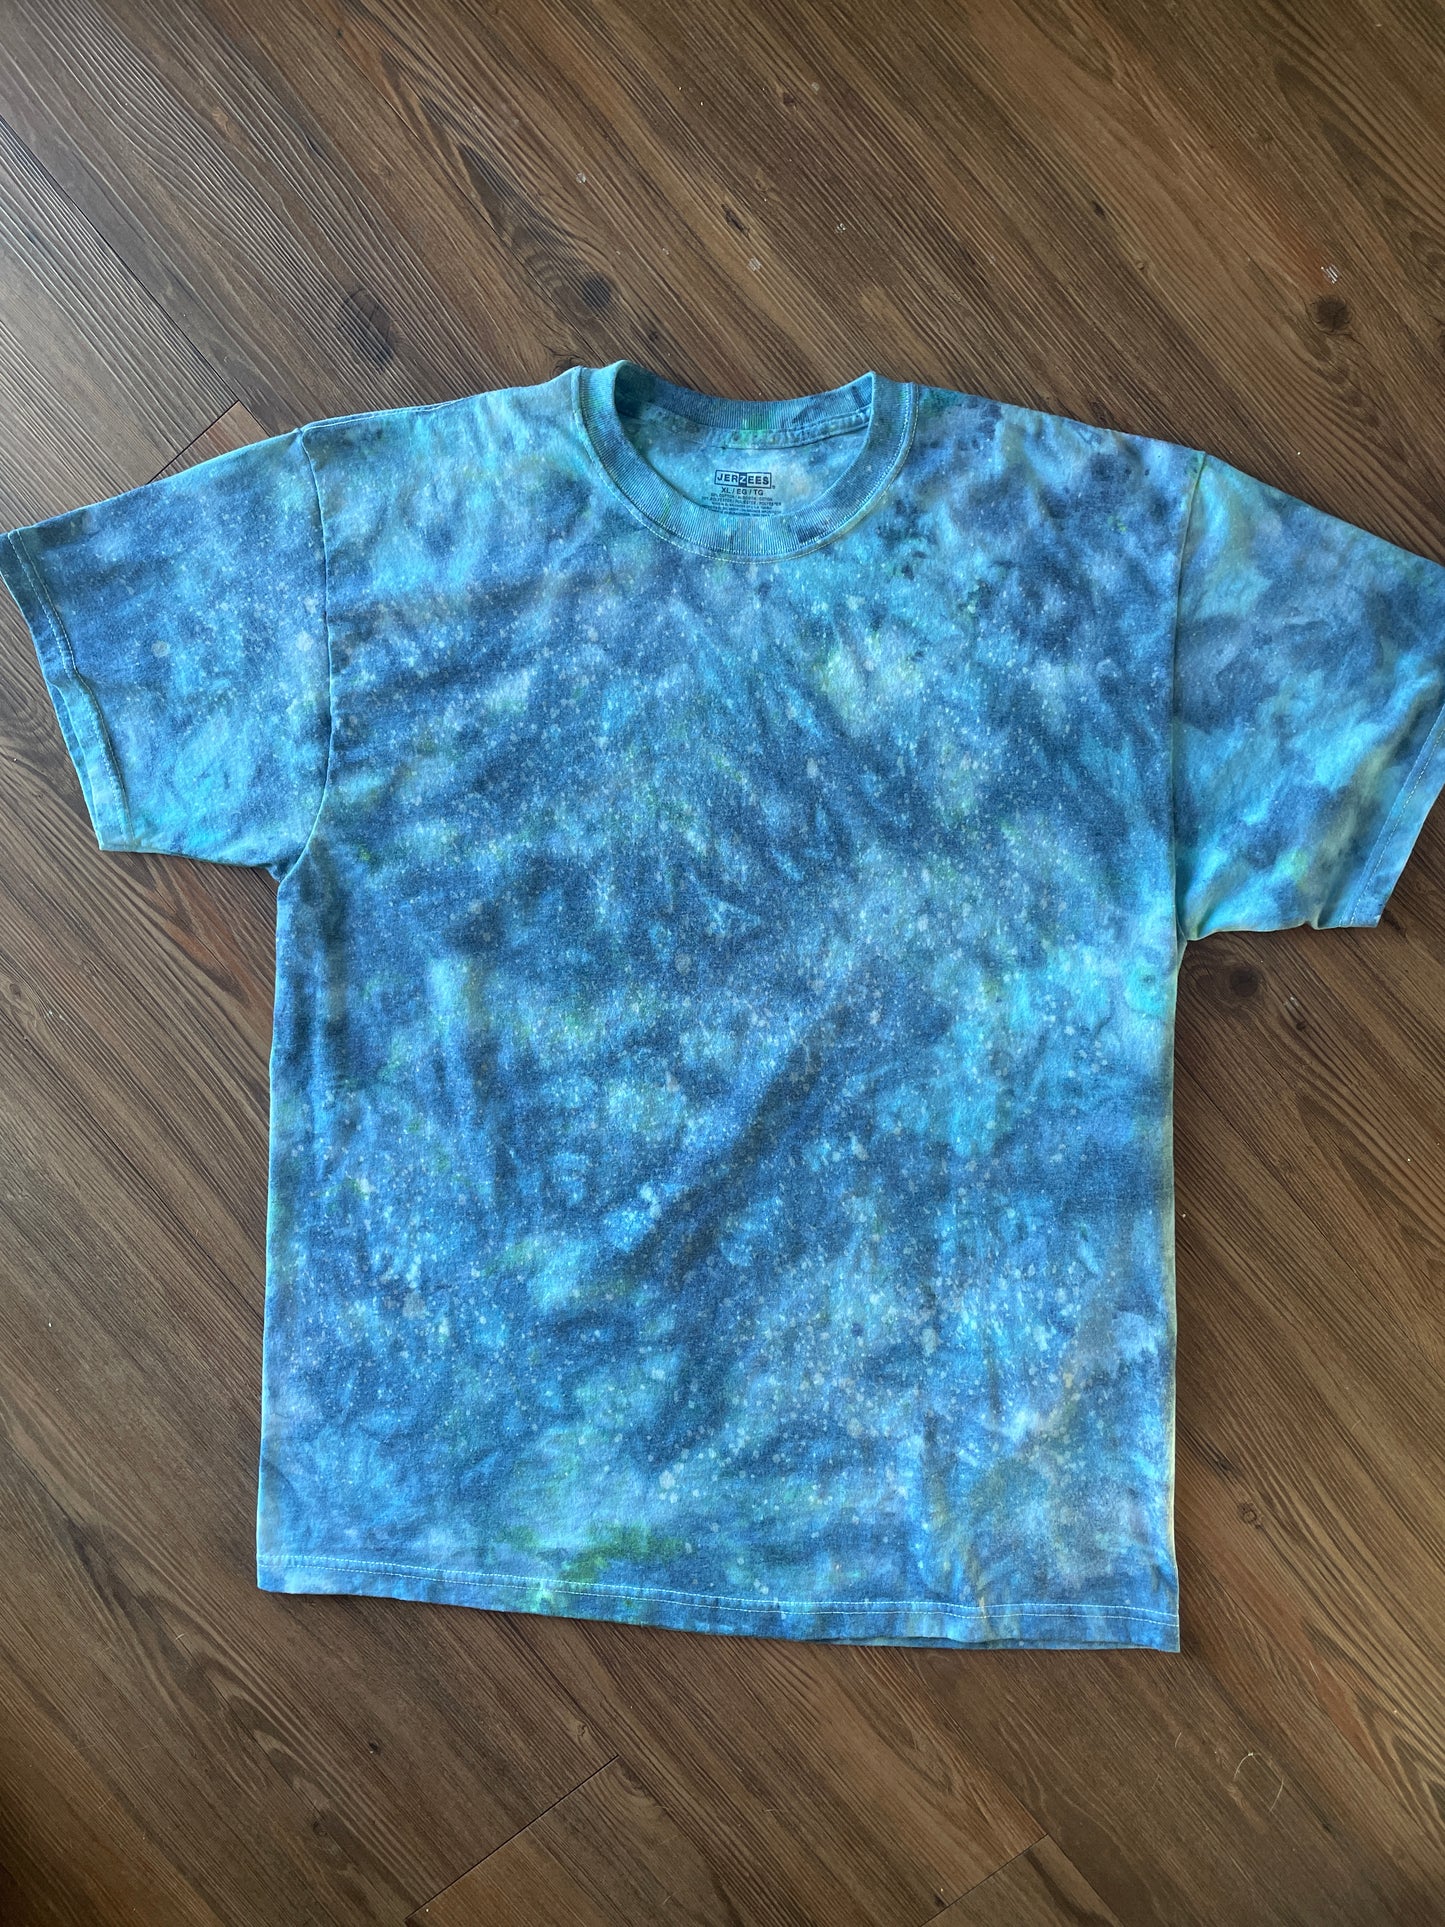 XL Men’s Shades of Blue Galaxy Dye Handmade Tie Dye Short Sleeve T-Shirt